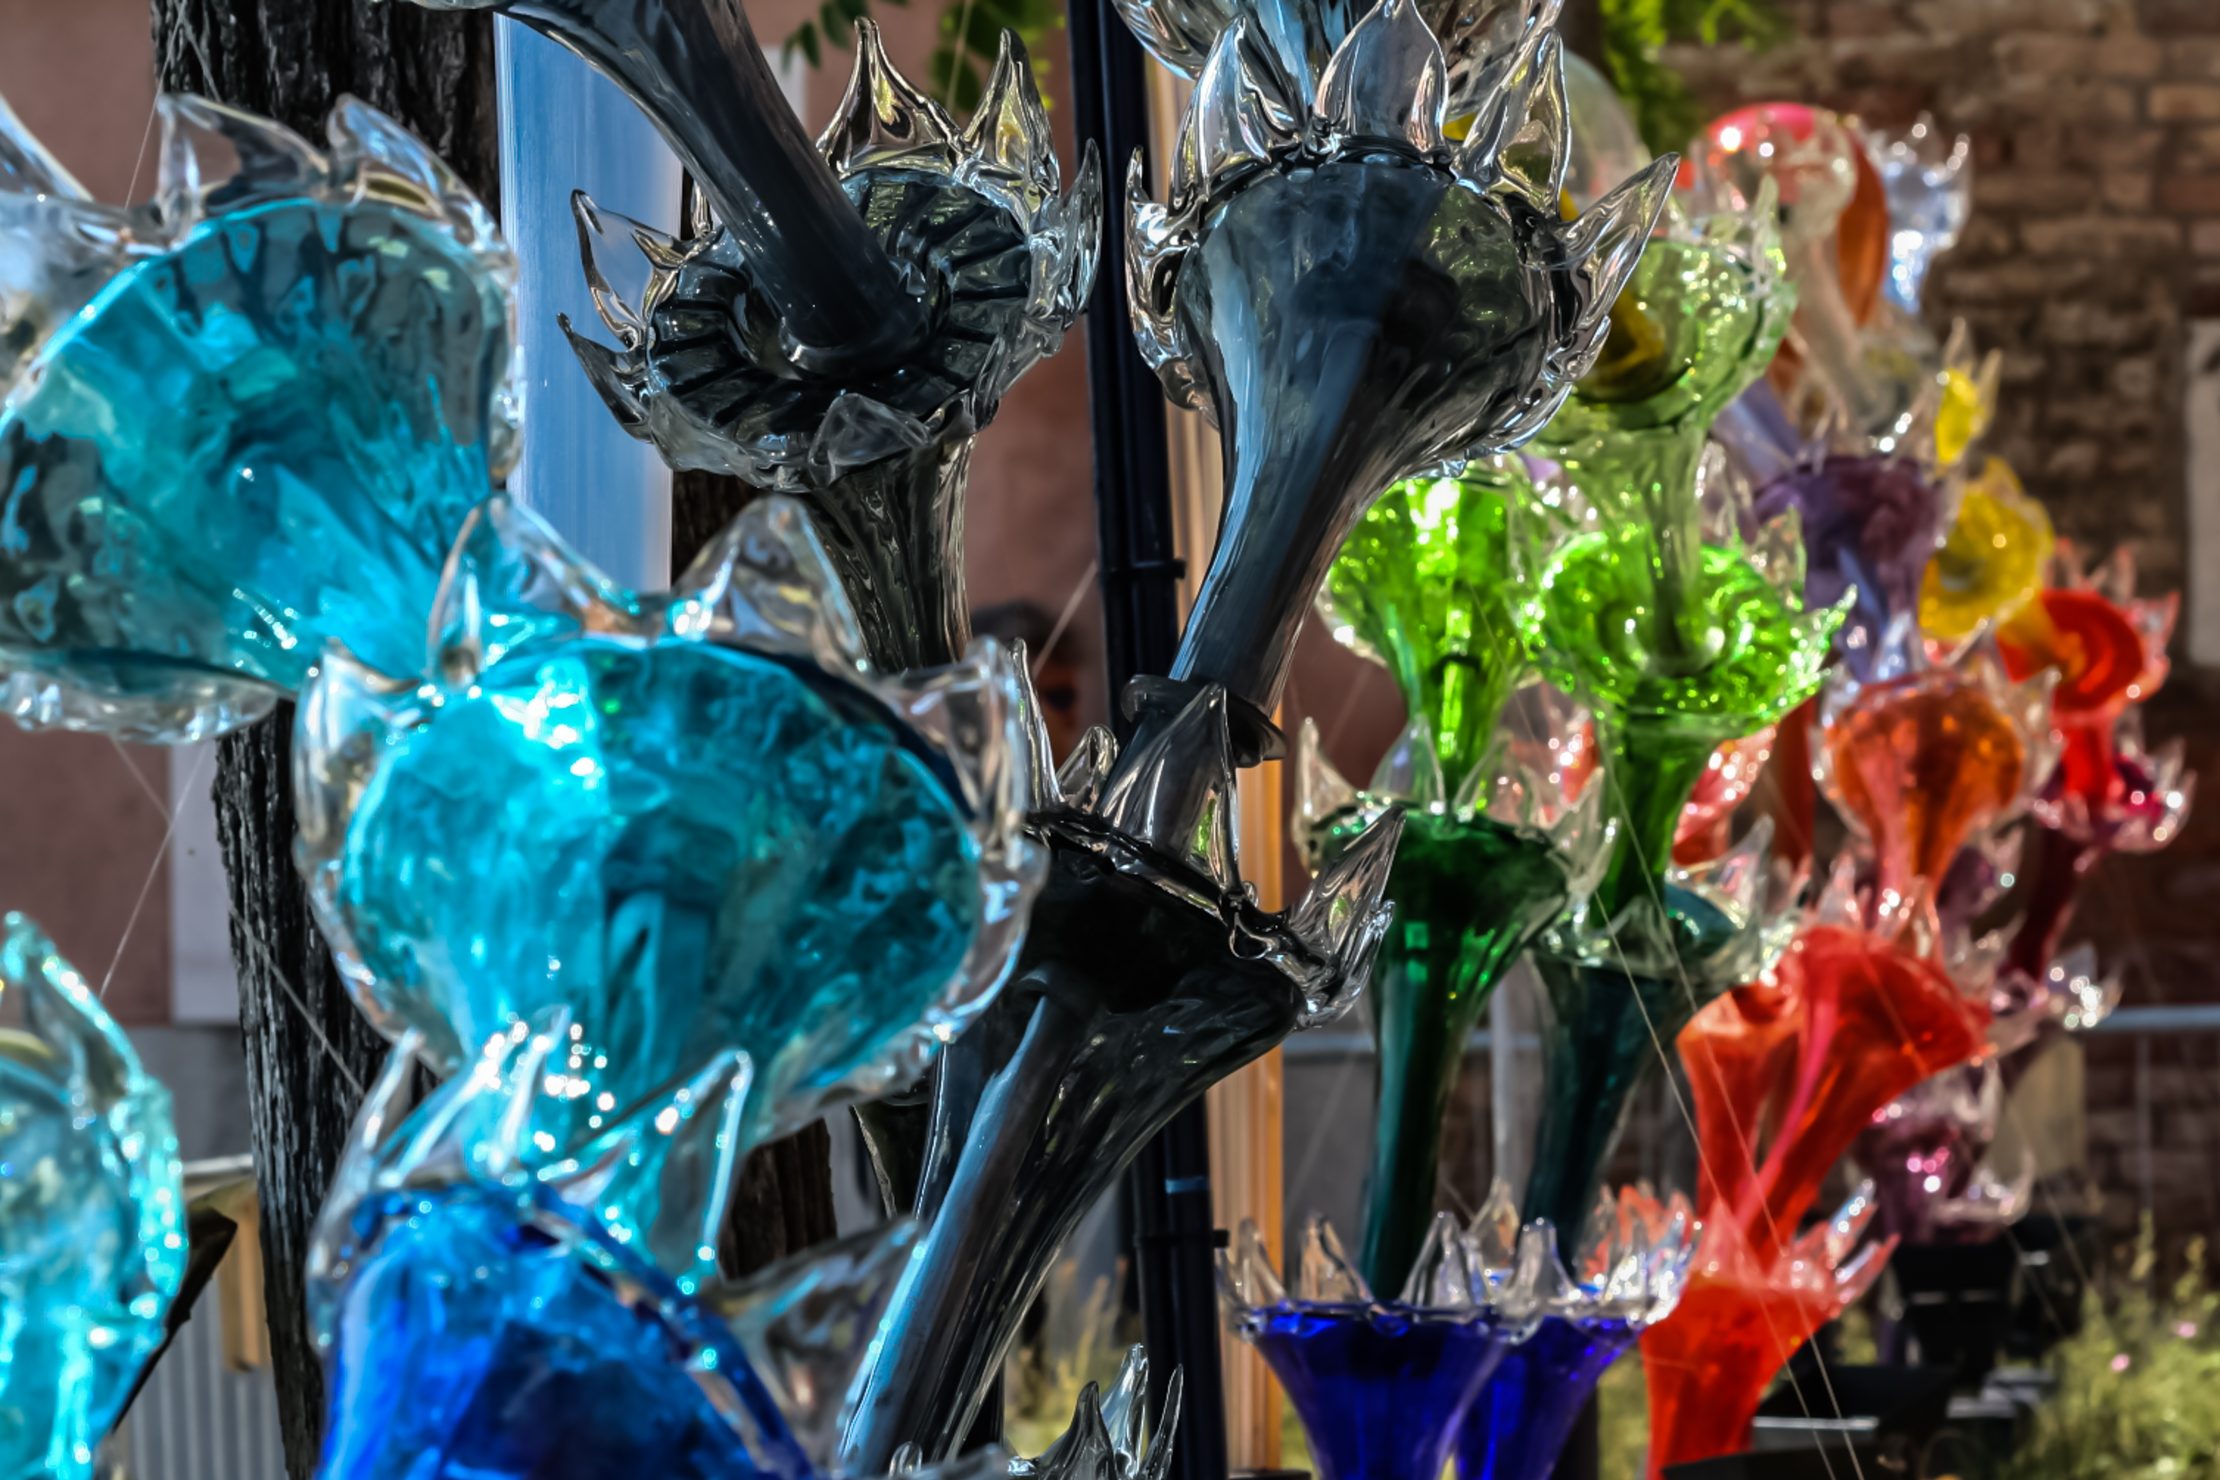 Murano glass from Venice